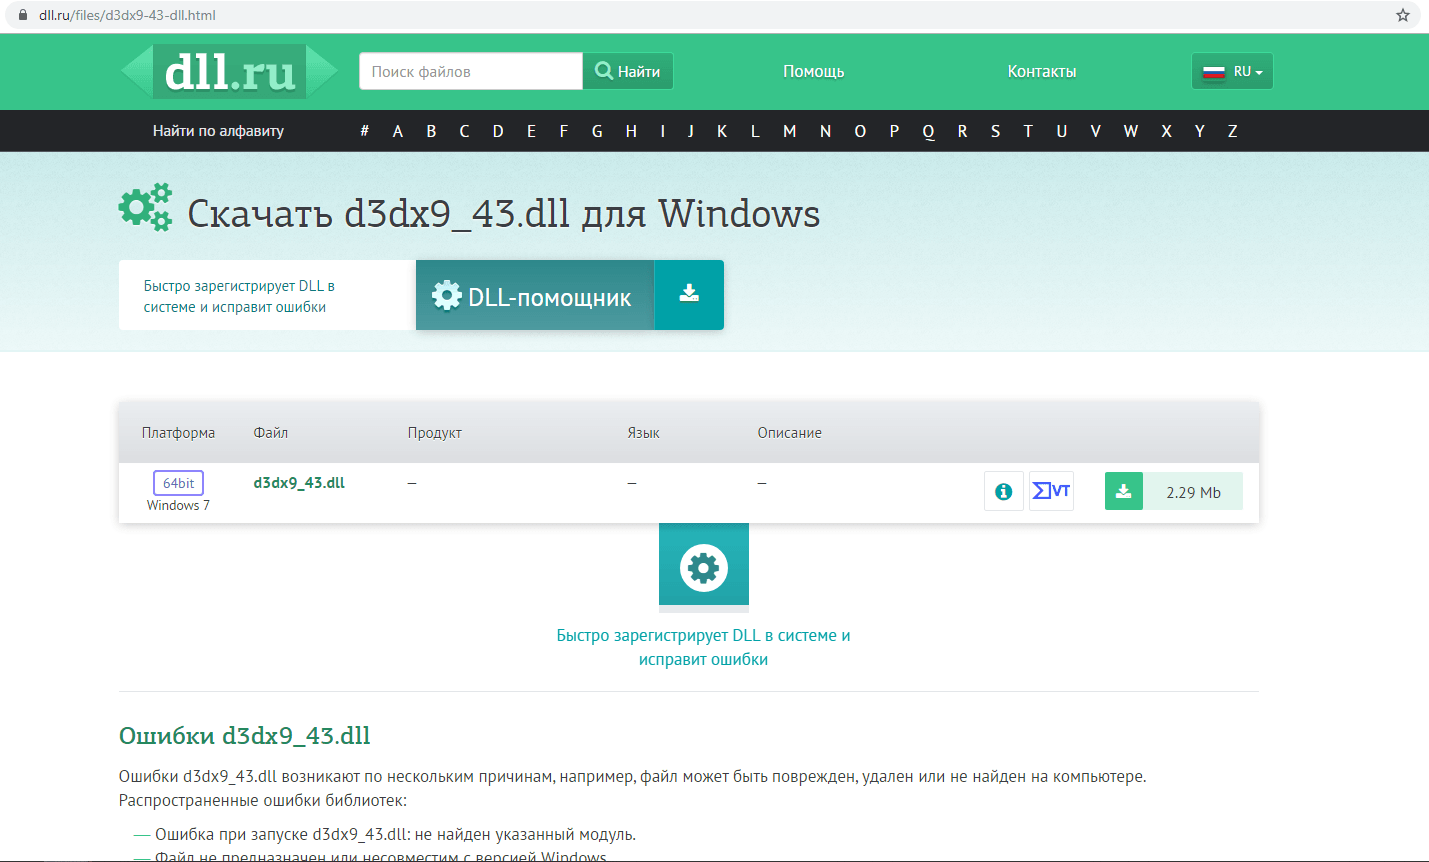 Сайт для загрузки файла d3dx9_43.dll в Windows